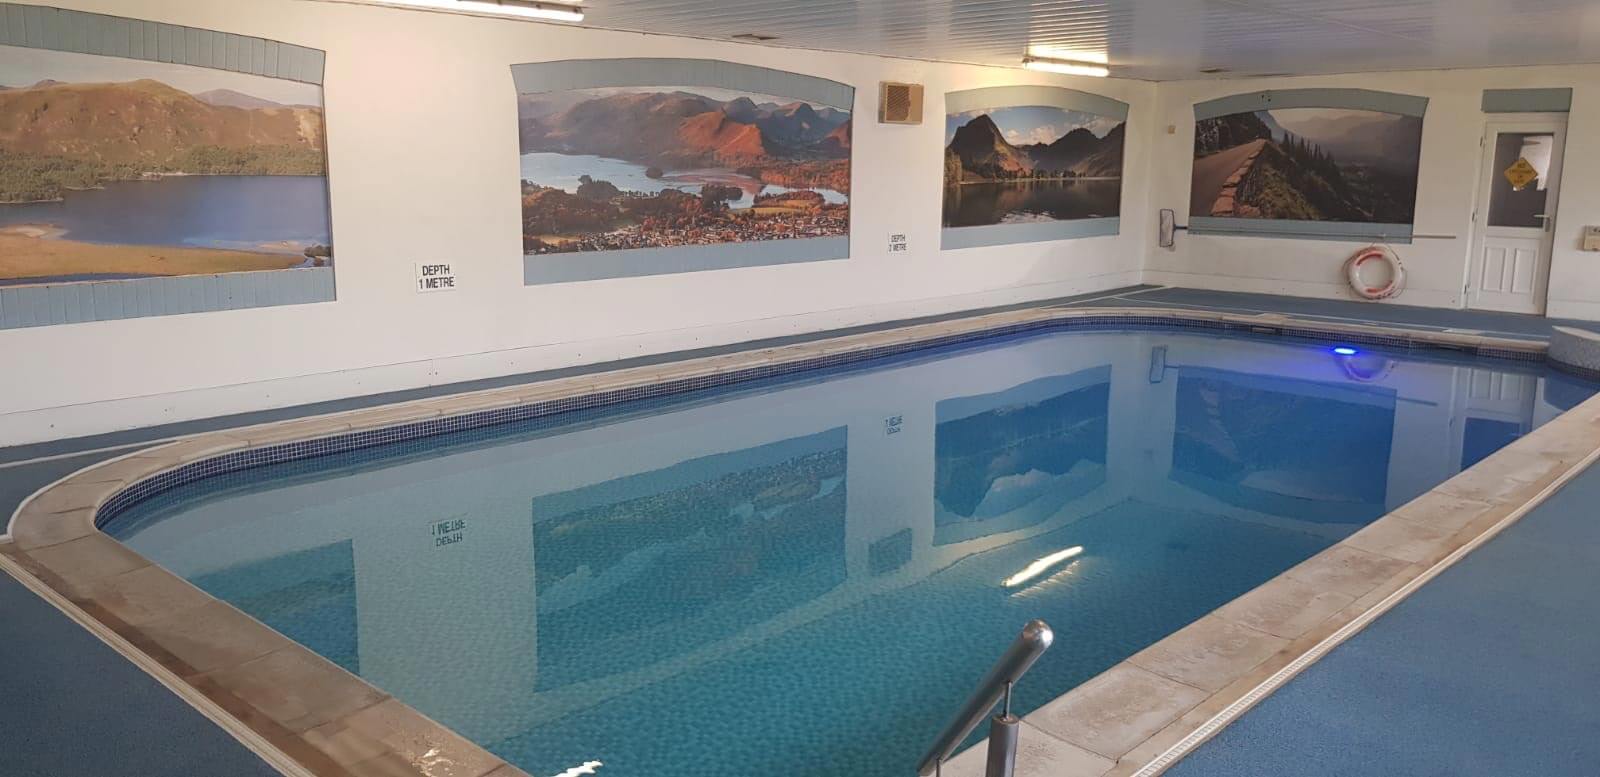 Dalston Leisure Pool - Private swimming pool in Carlisle